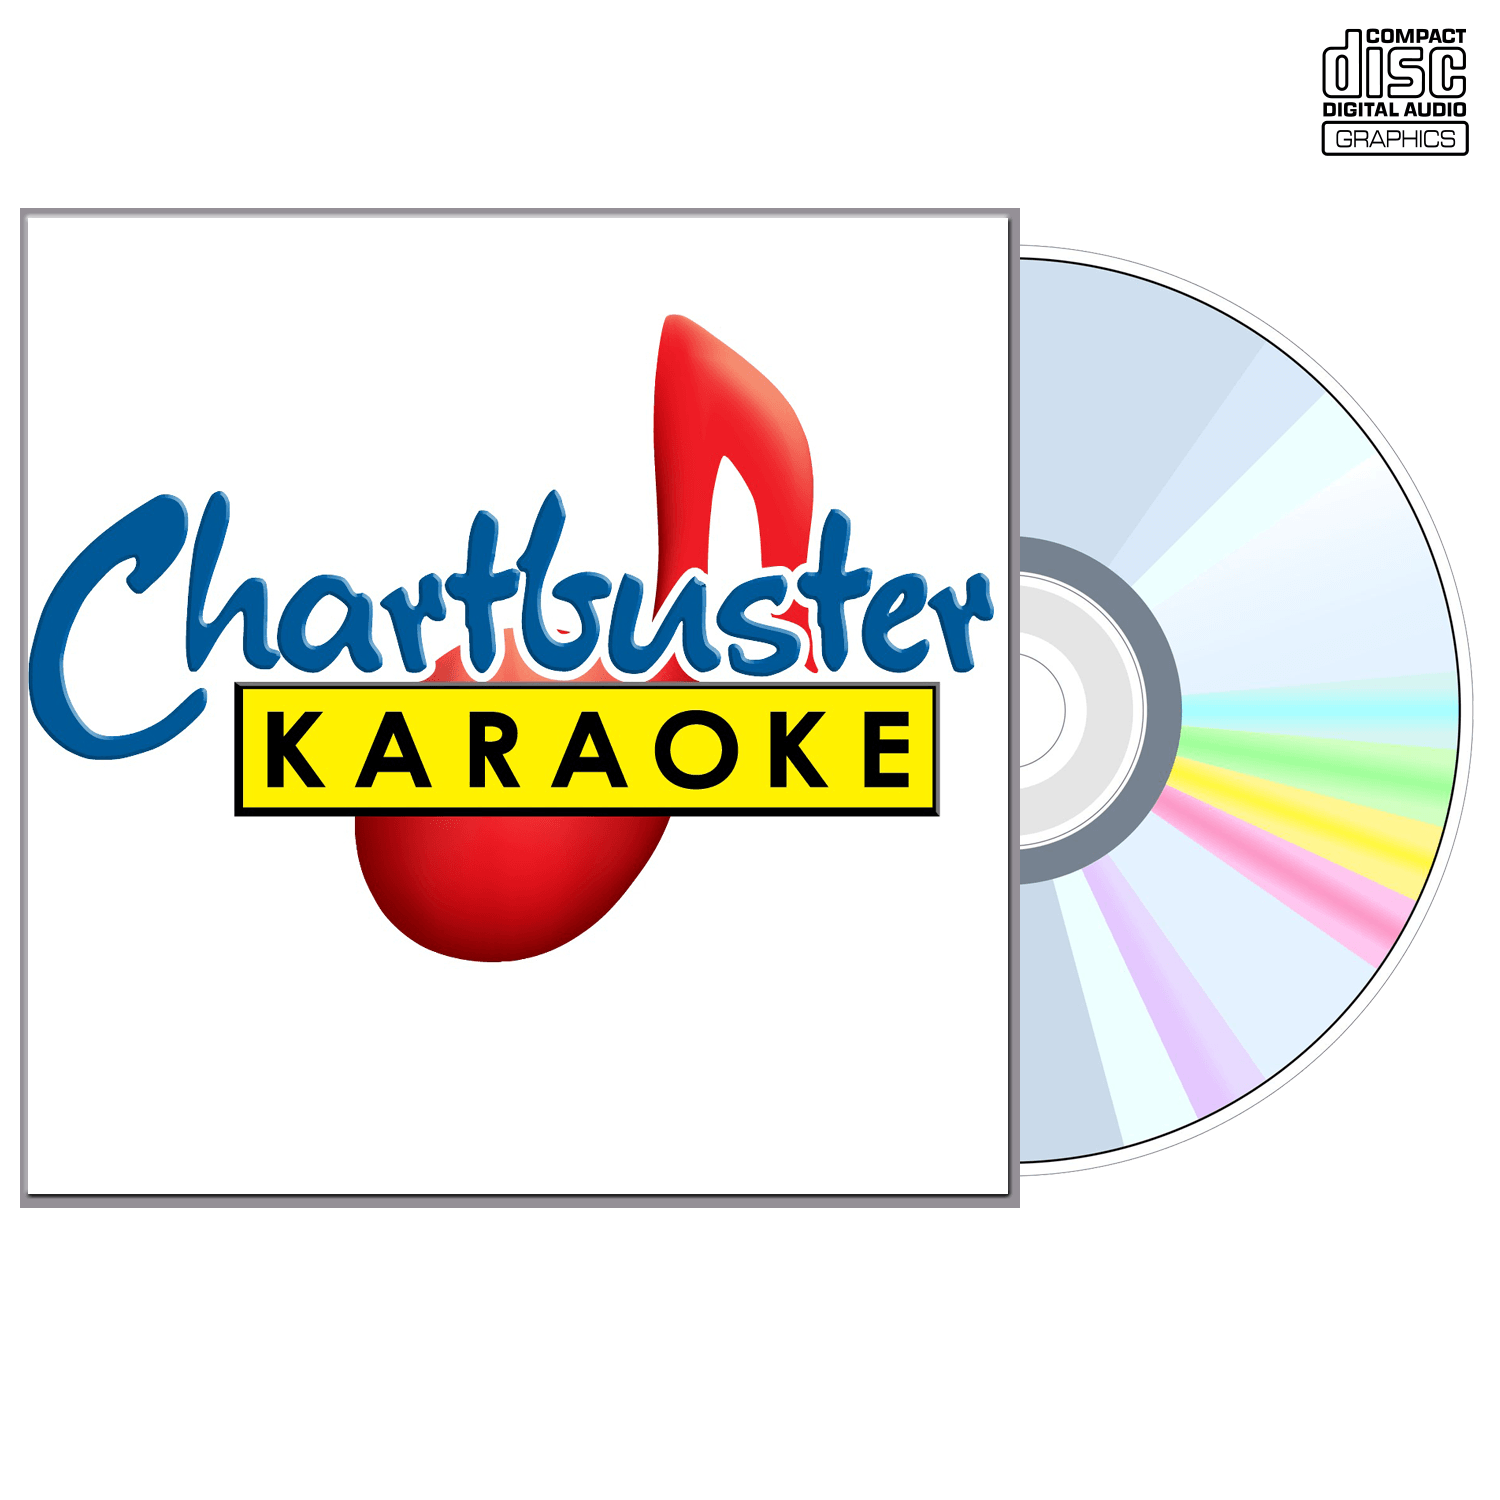 Jeff And Sheri Easter - CD+G - Chartbuster Karaoke - Karaoke Home Entertainment